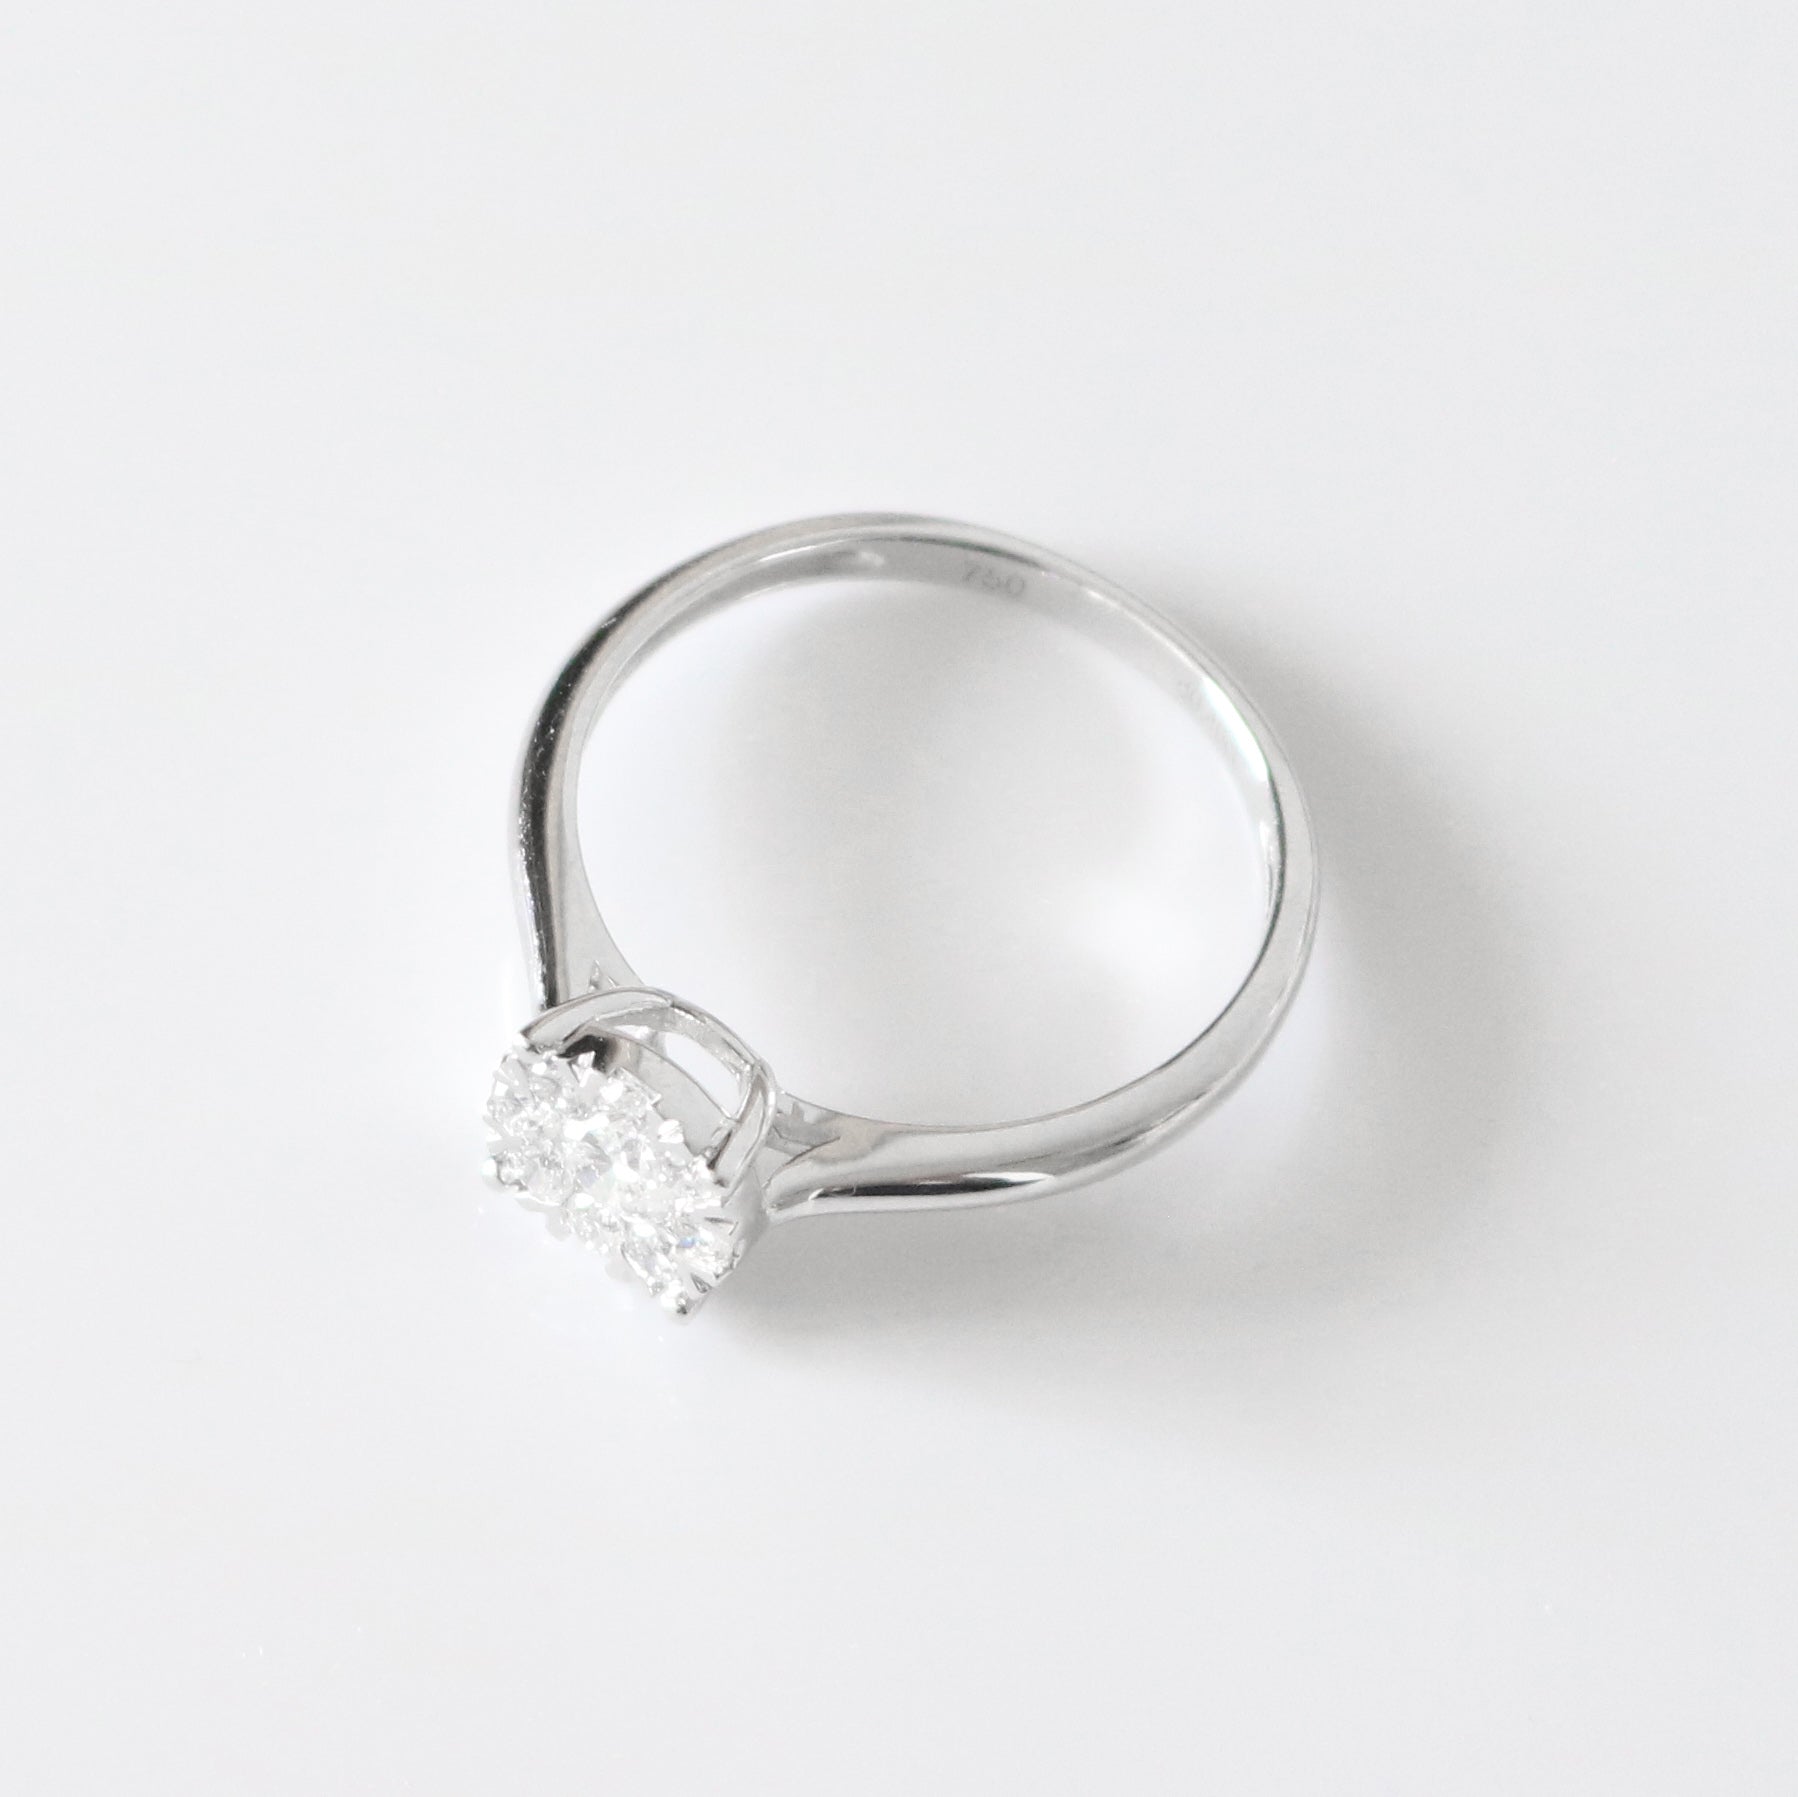 18k白金8圍1圓鑽戒指側面 18k White Gold Illusion Setting Diamond Ring on side view